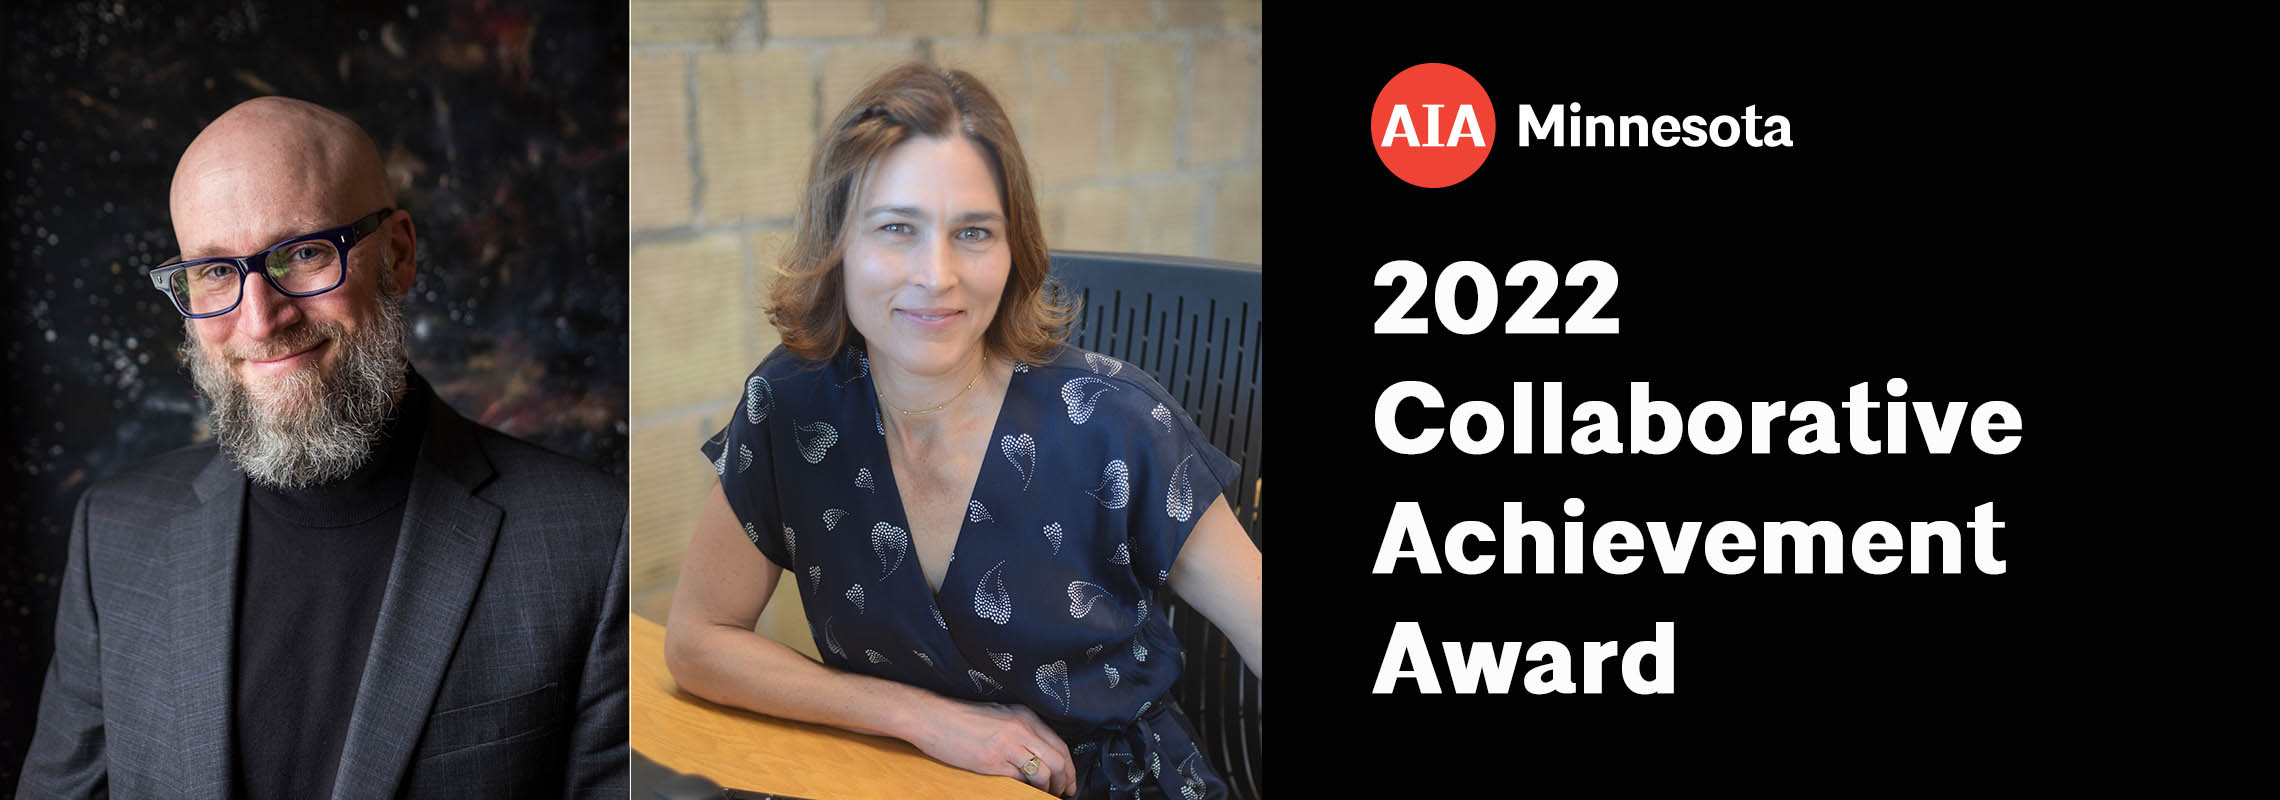 Two Receive AIA Minnesota Collaborative Achievement Awards